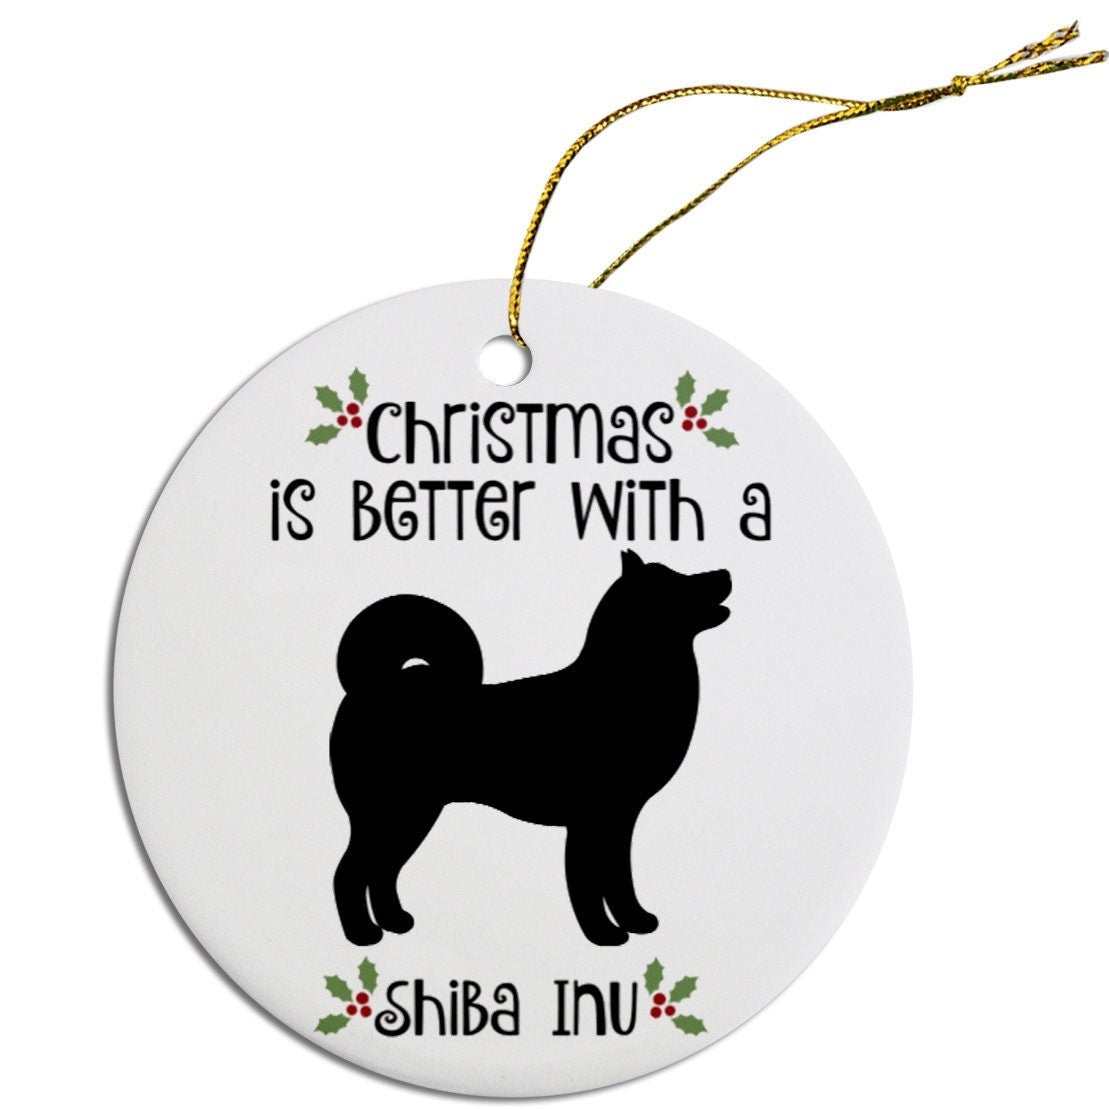 Dog Breed Specific Round Christmas Ornament, "Shiba Inu"